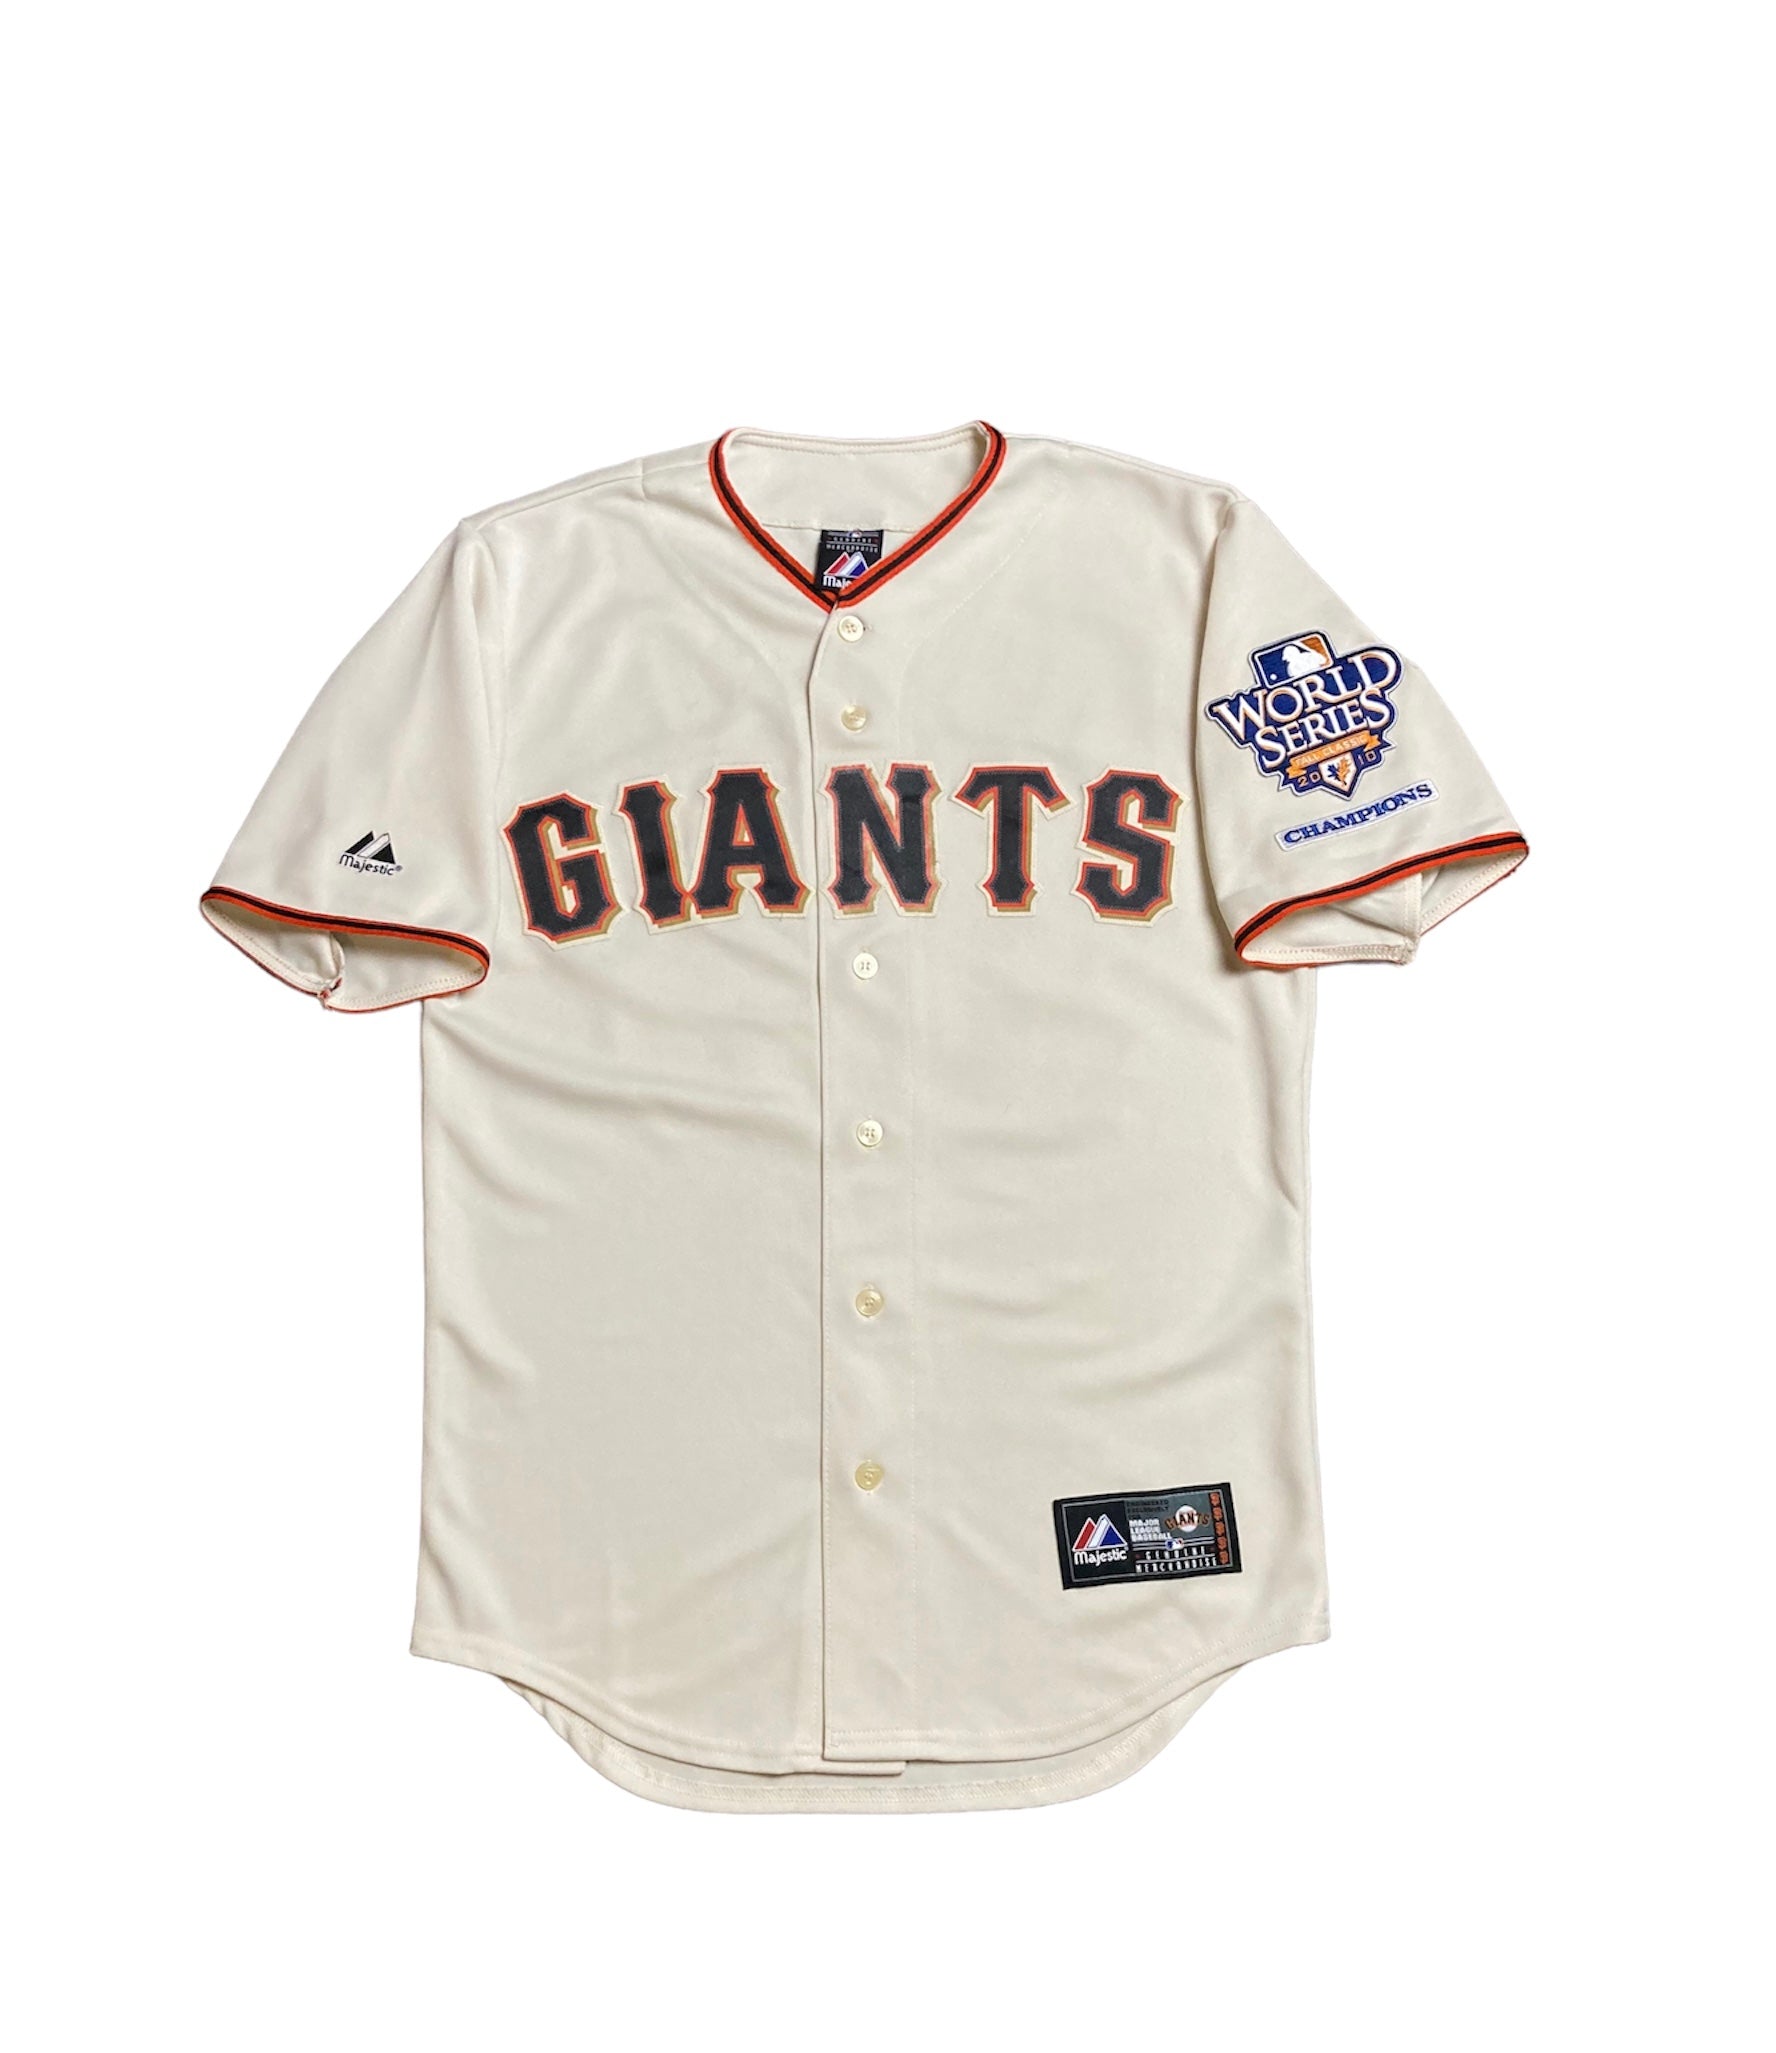 San Francisco Giants Vintage in San Francisco Giants Team Shop 